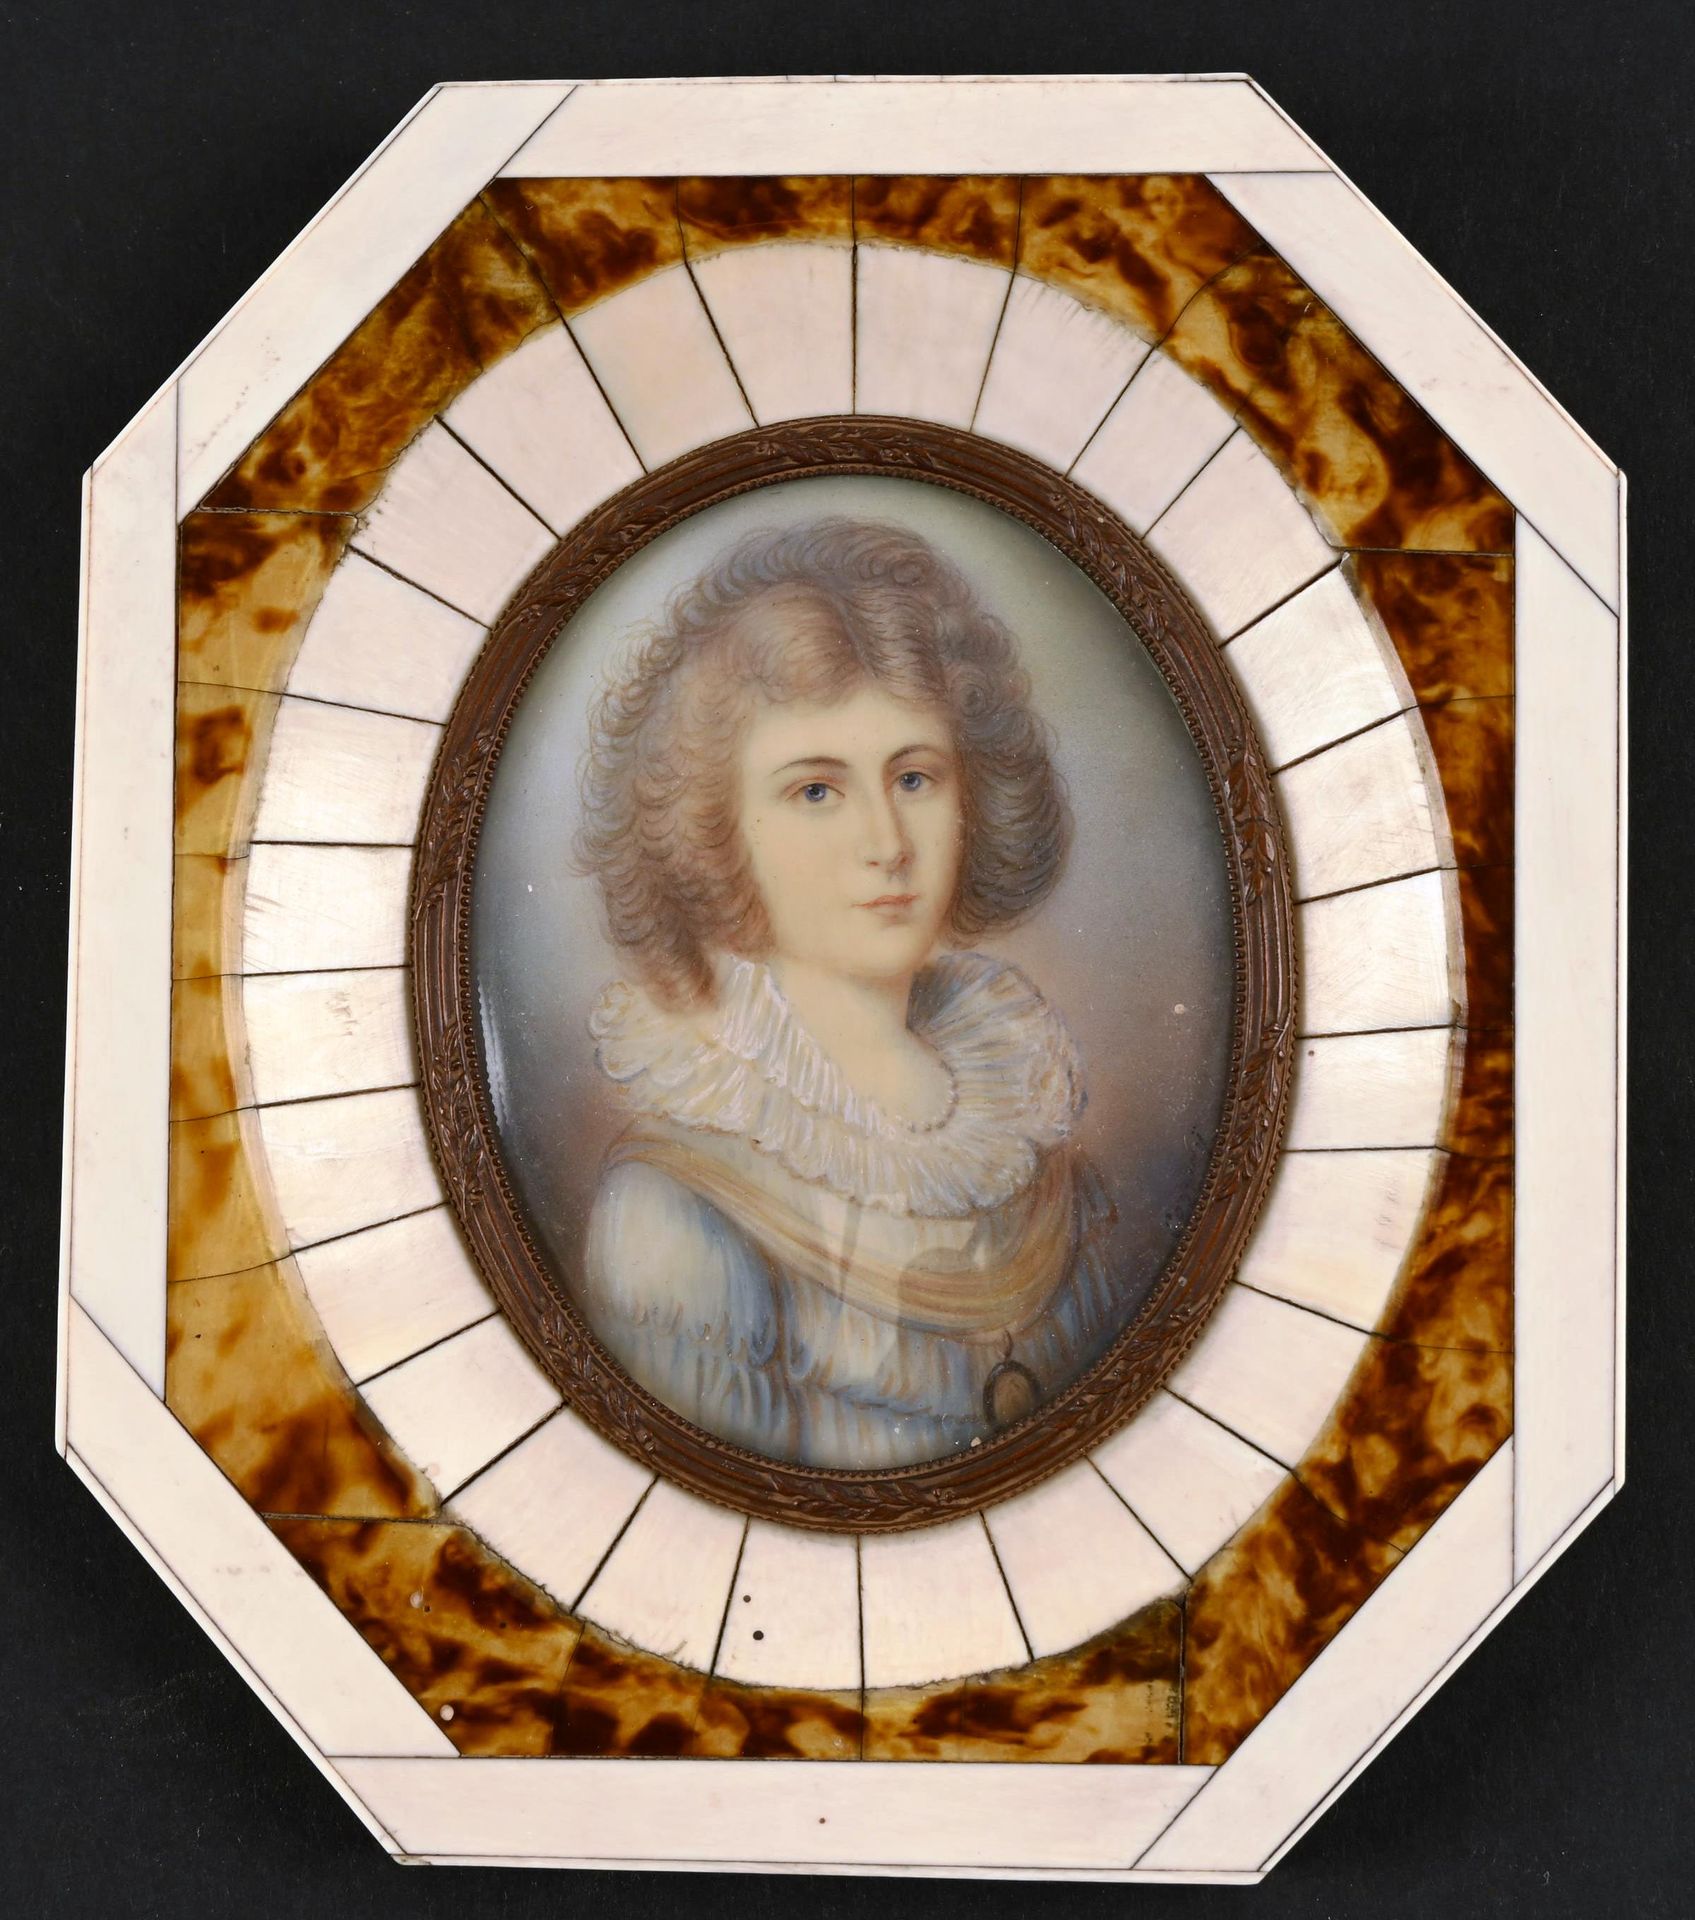 [Miniature]Richard COSWAY (1742-1821) [Miniature]

Richard COSWAY (1742-1821)

"&hellip;